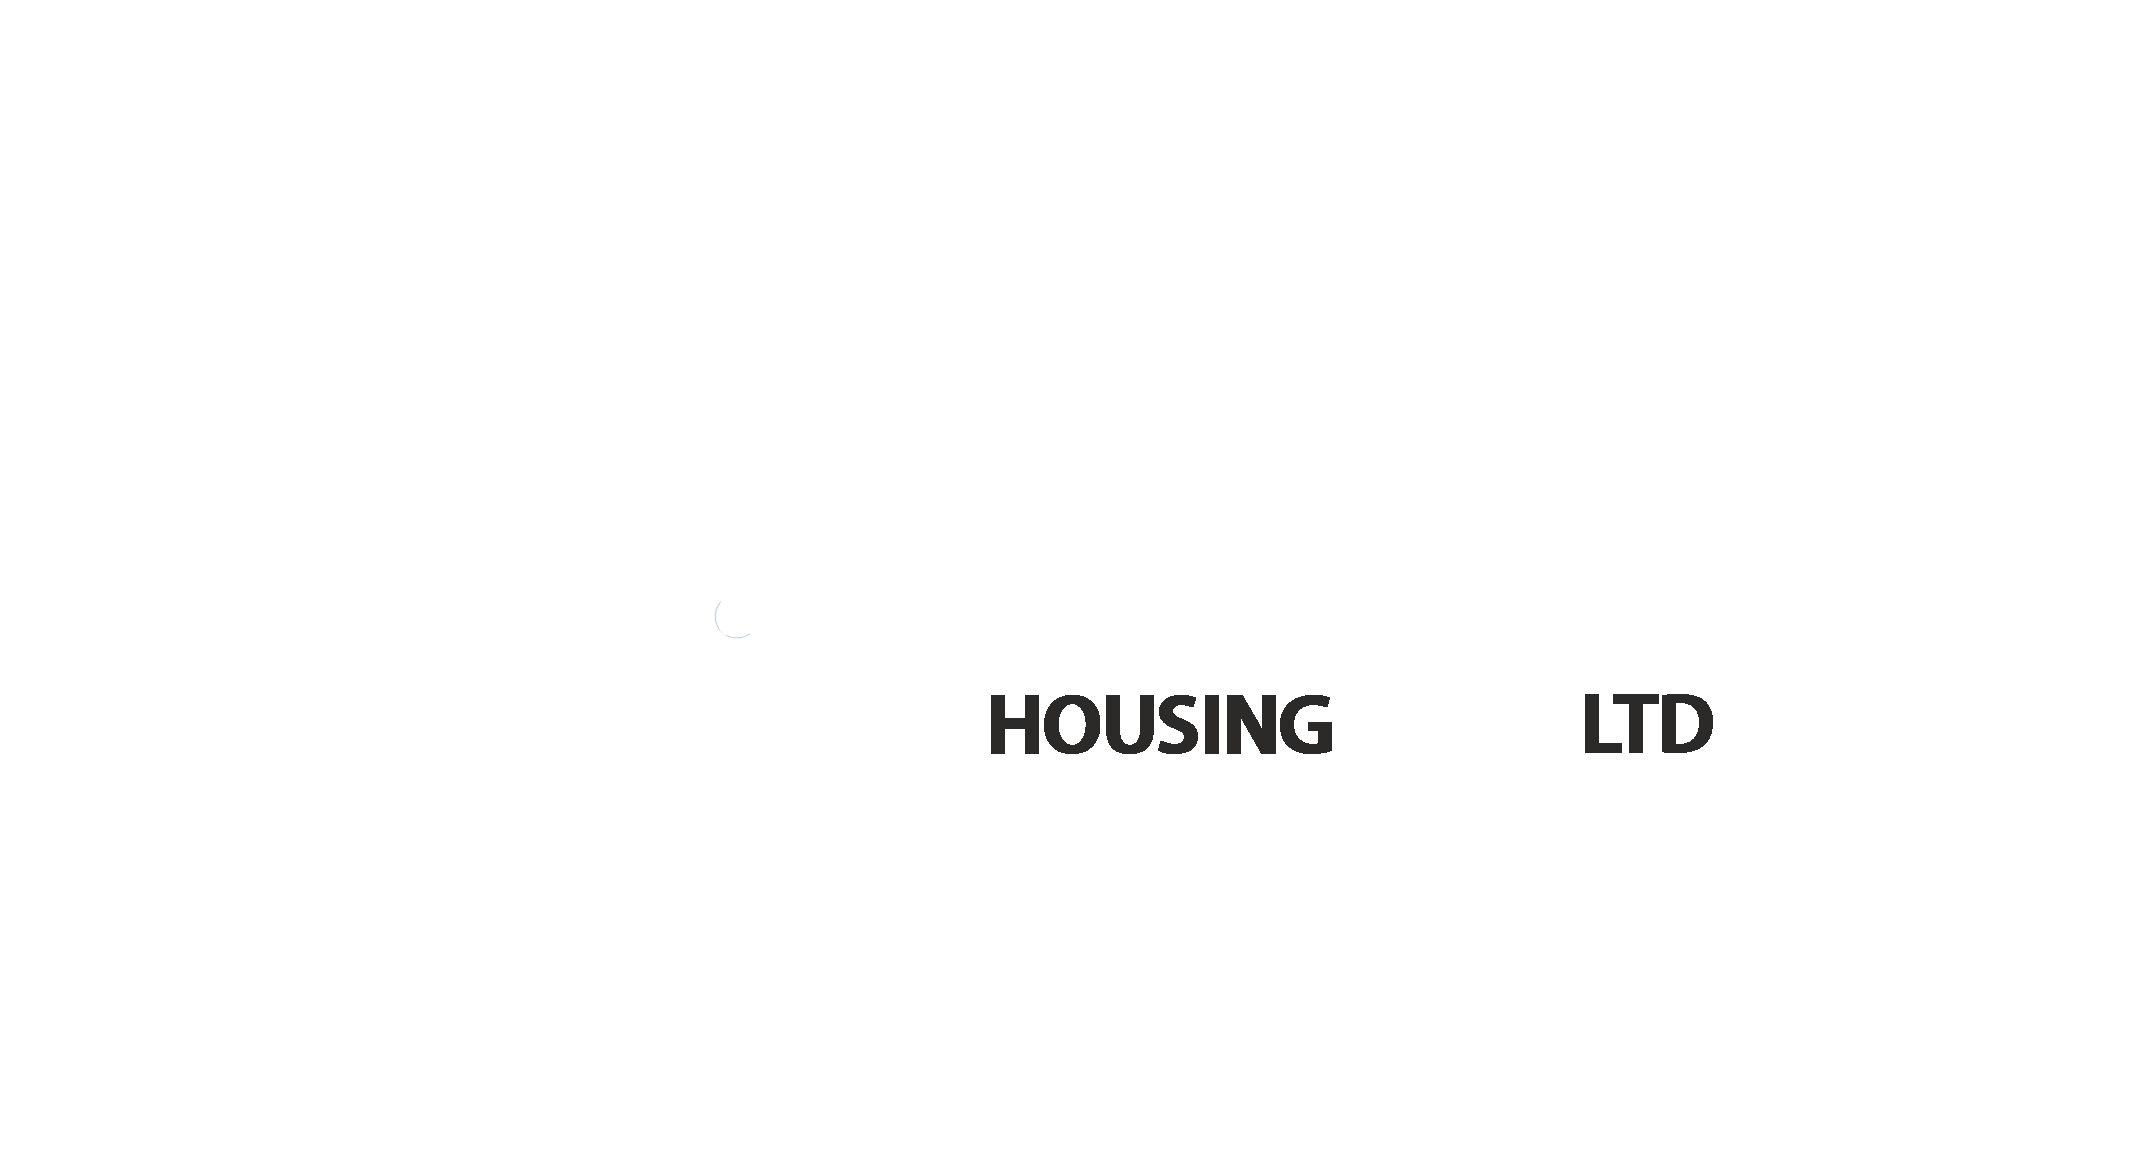 Legacy Housing